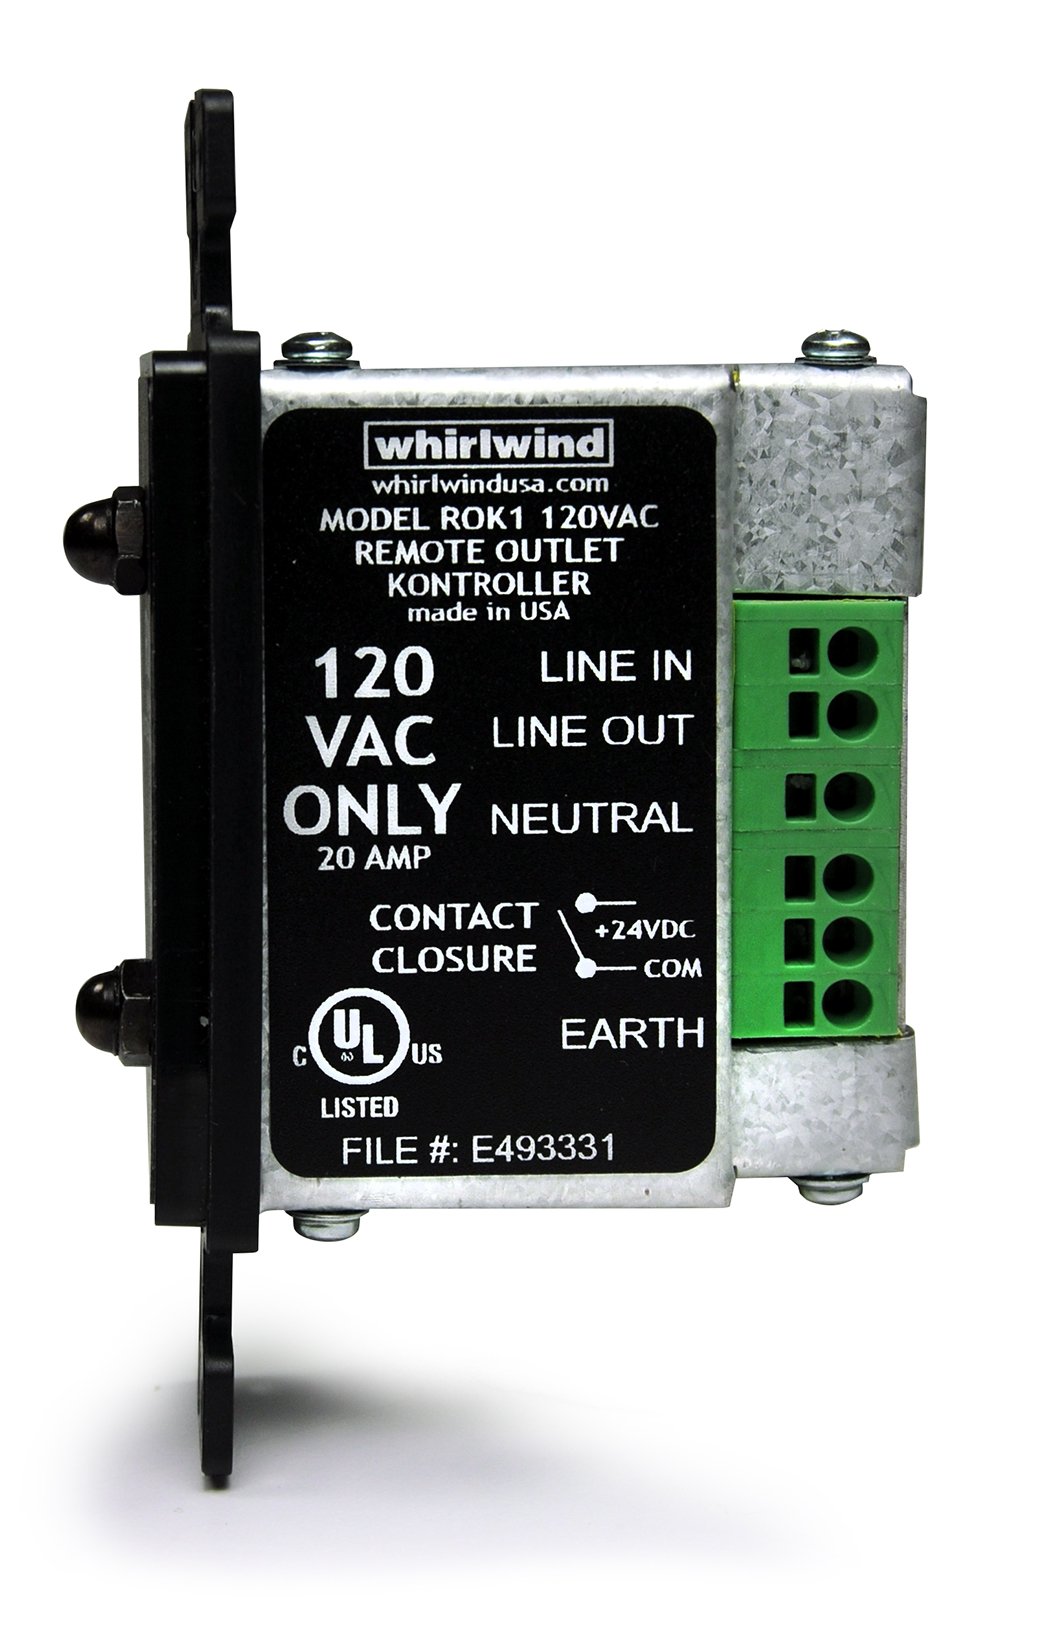 Whirlwind ROK1 Power Link Remote Outlet Kontroller 120V, 20A Decora Module